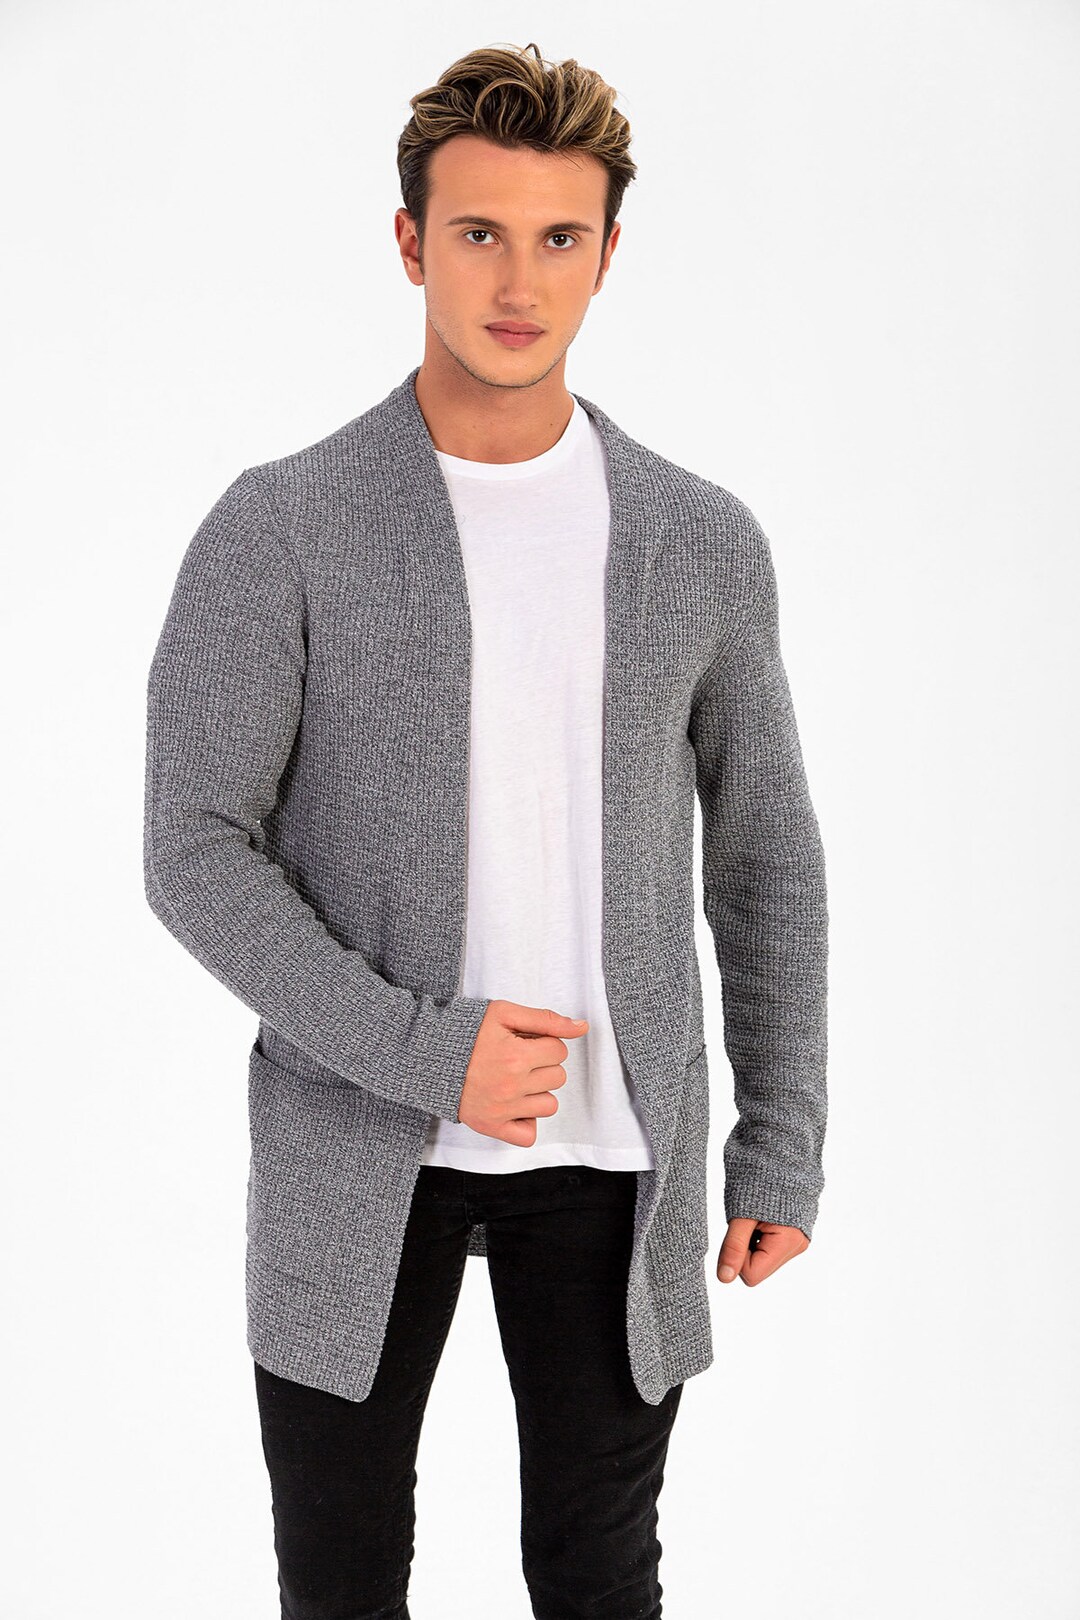 Men's Cardigan Knitted Woolen Sweater Open Front Sweater - Etsy